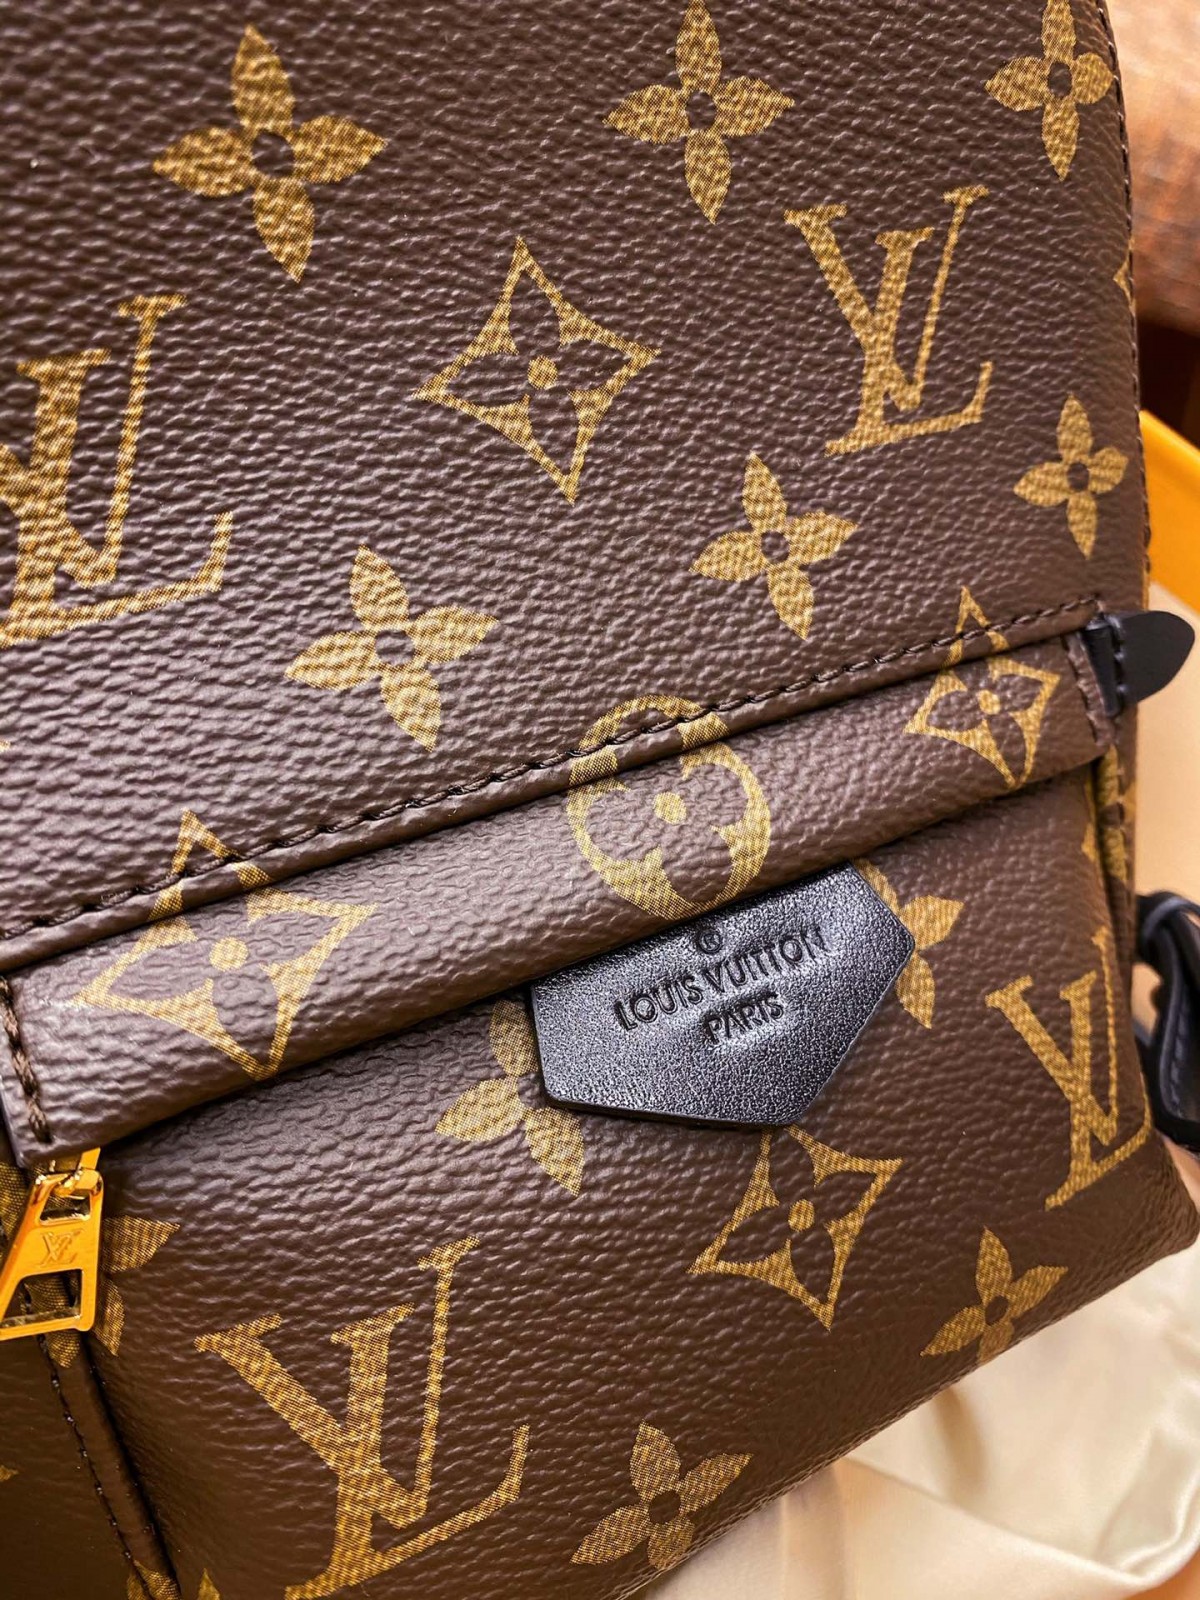 Louis Vuitton iibhegi ubhaka replica uphononongo (2022 ihlaziywe)-Owona Mgangatho Fake Louis Vuitton Bag Online Store, Replica umyili bag ru